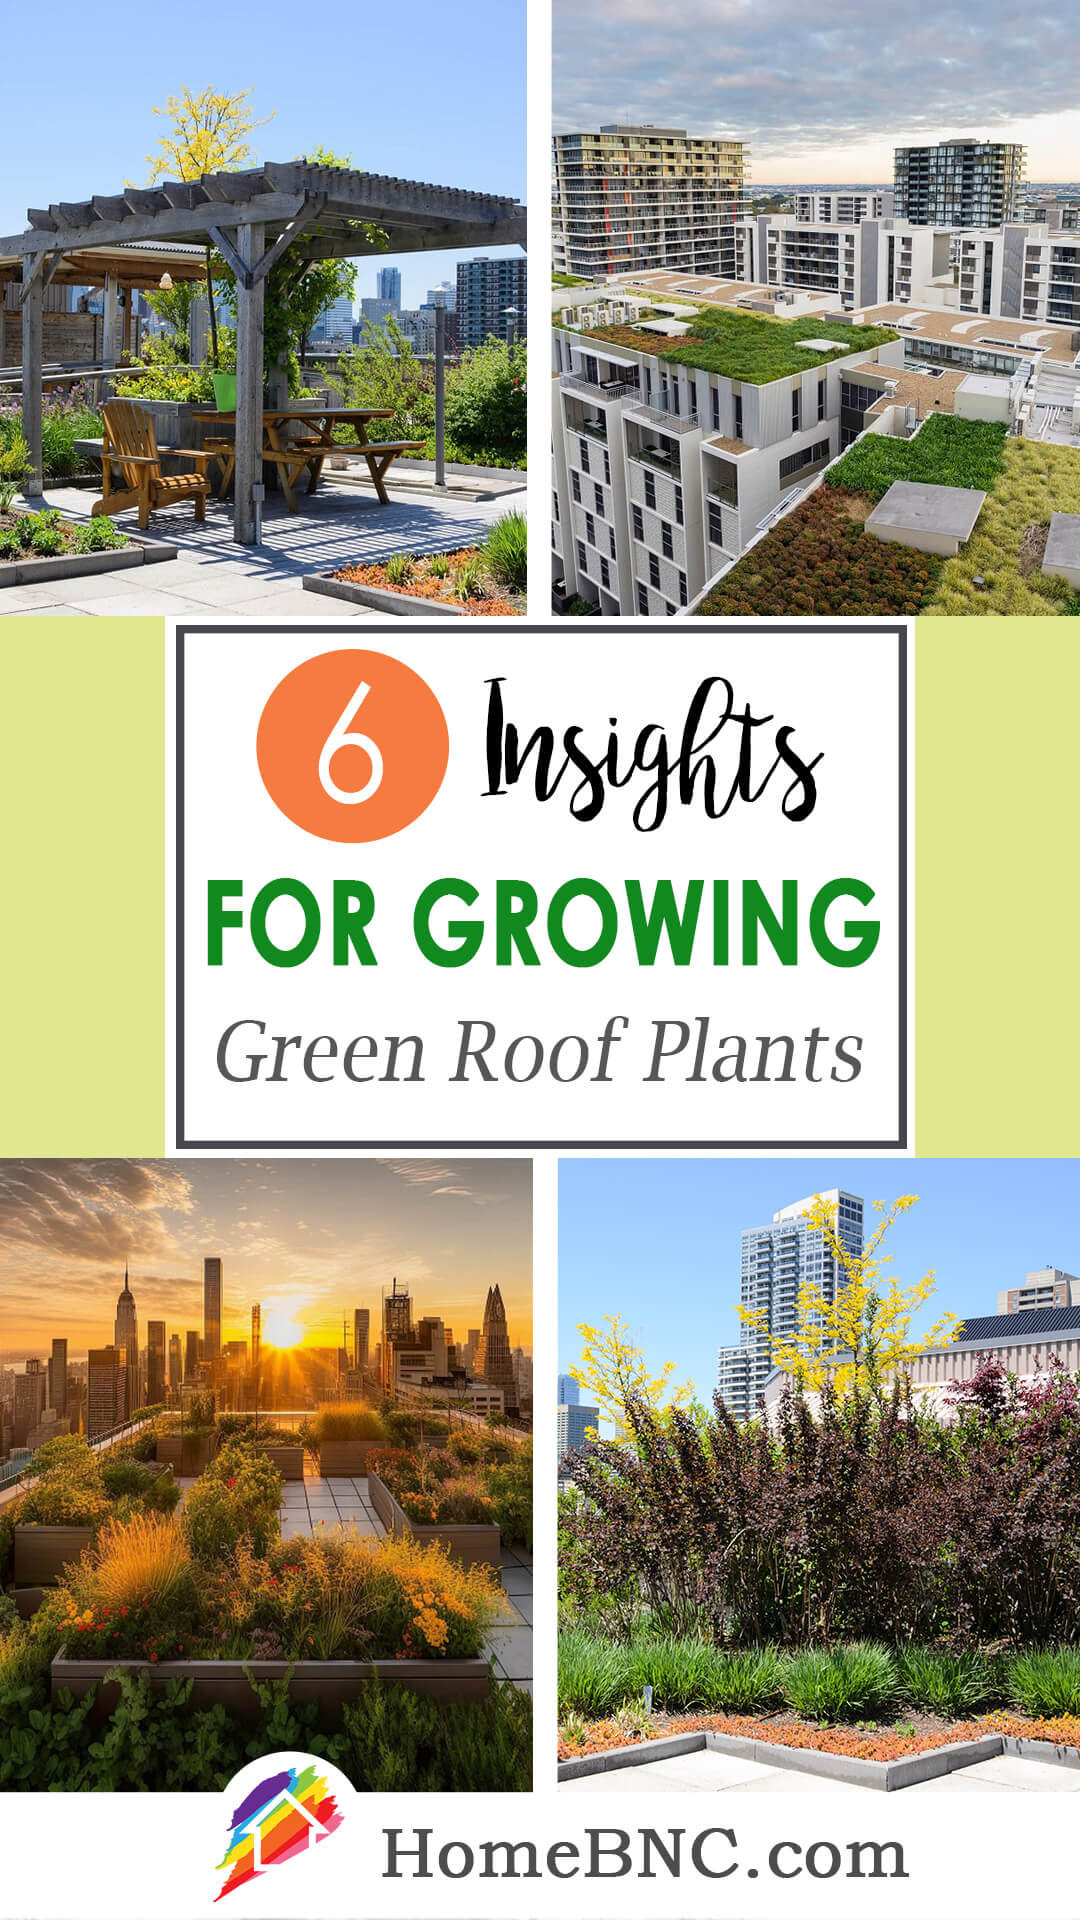 Green roof plants